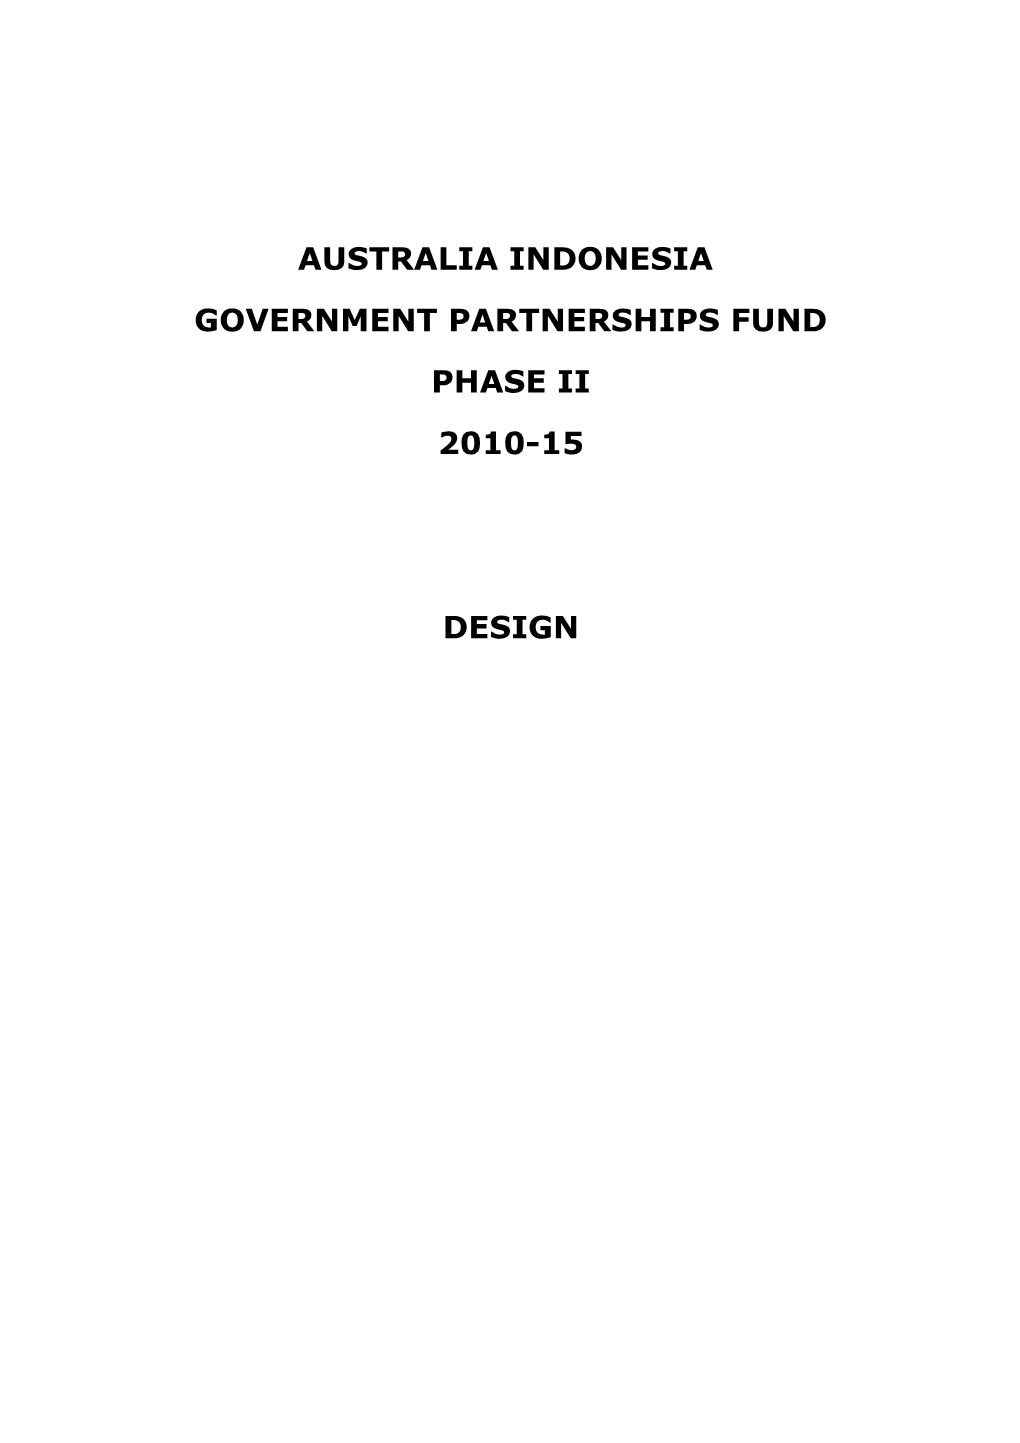 Australia Indonesia Partnership